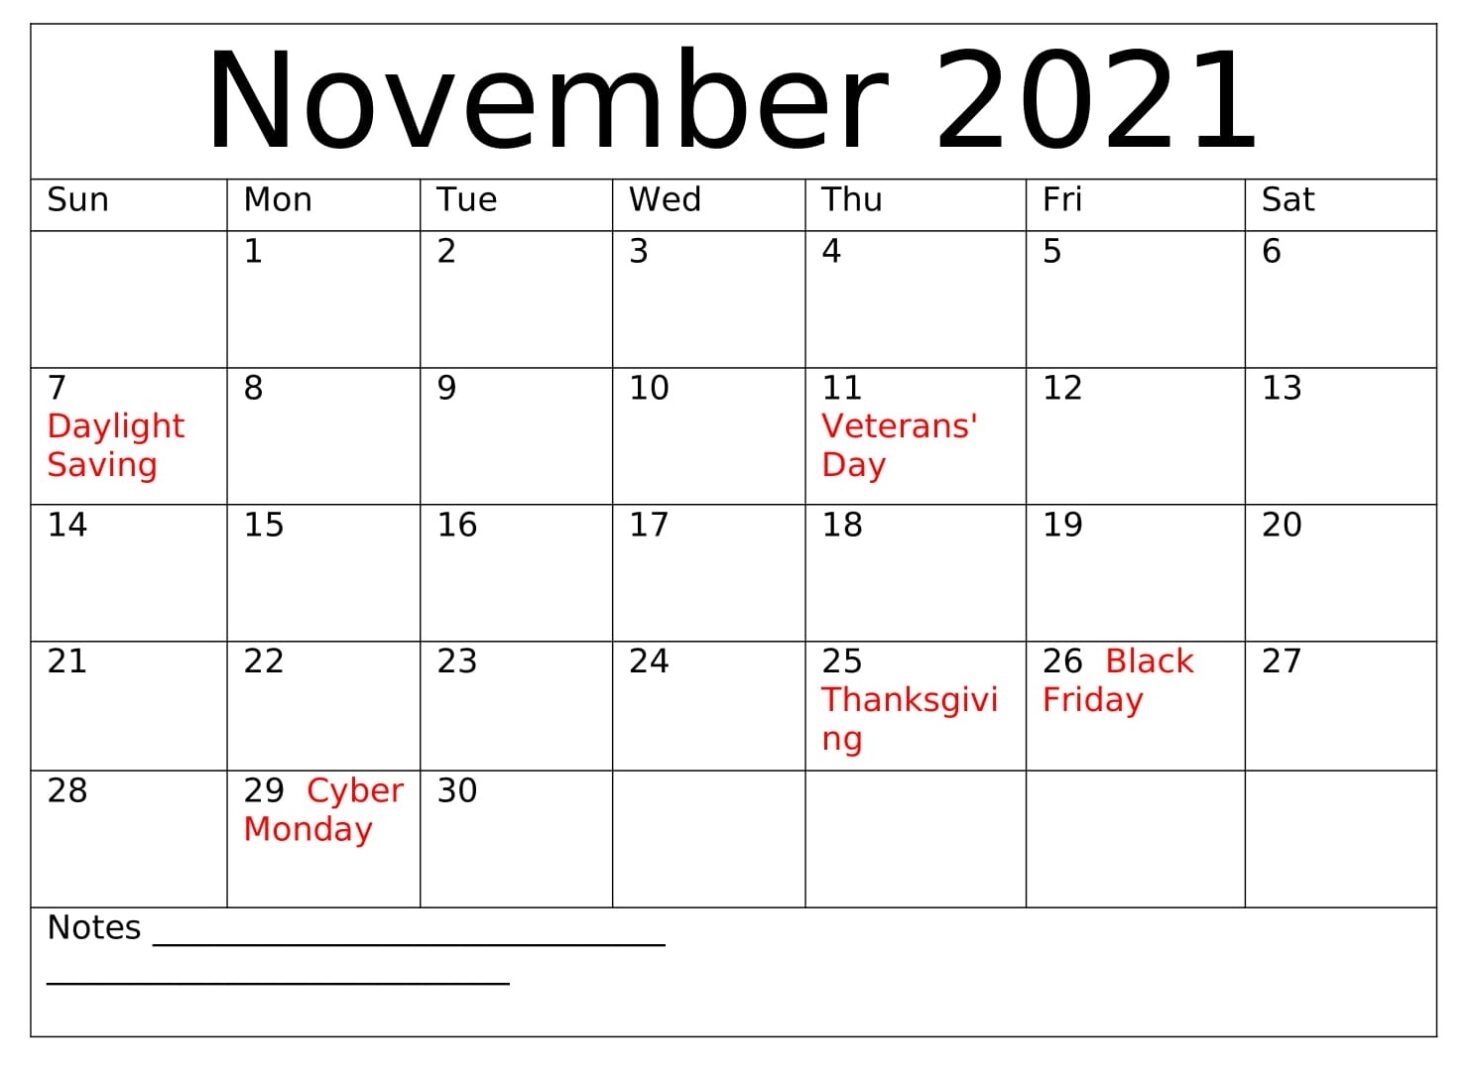 Download November 2021 Calendar With Holidays - Thecalendarpedia Calendar For November 2021 With Holidays